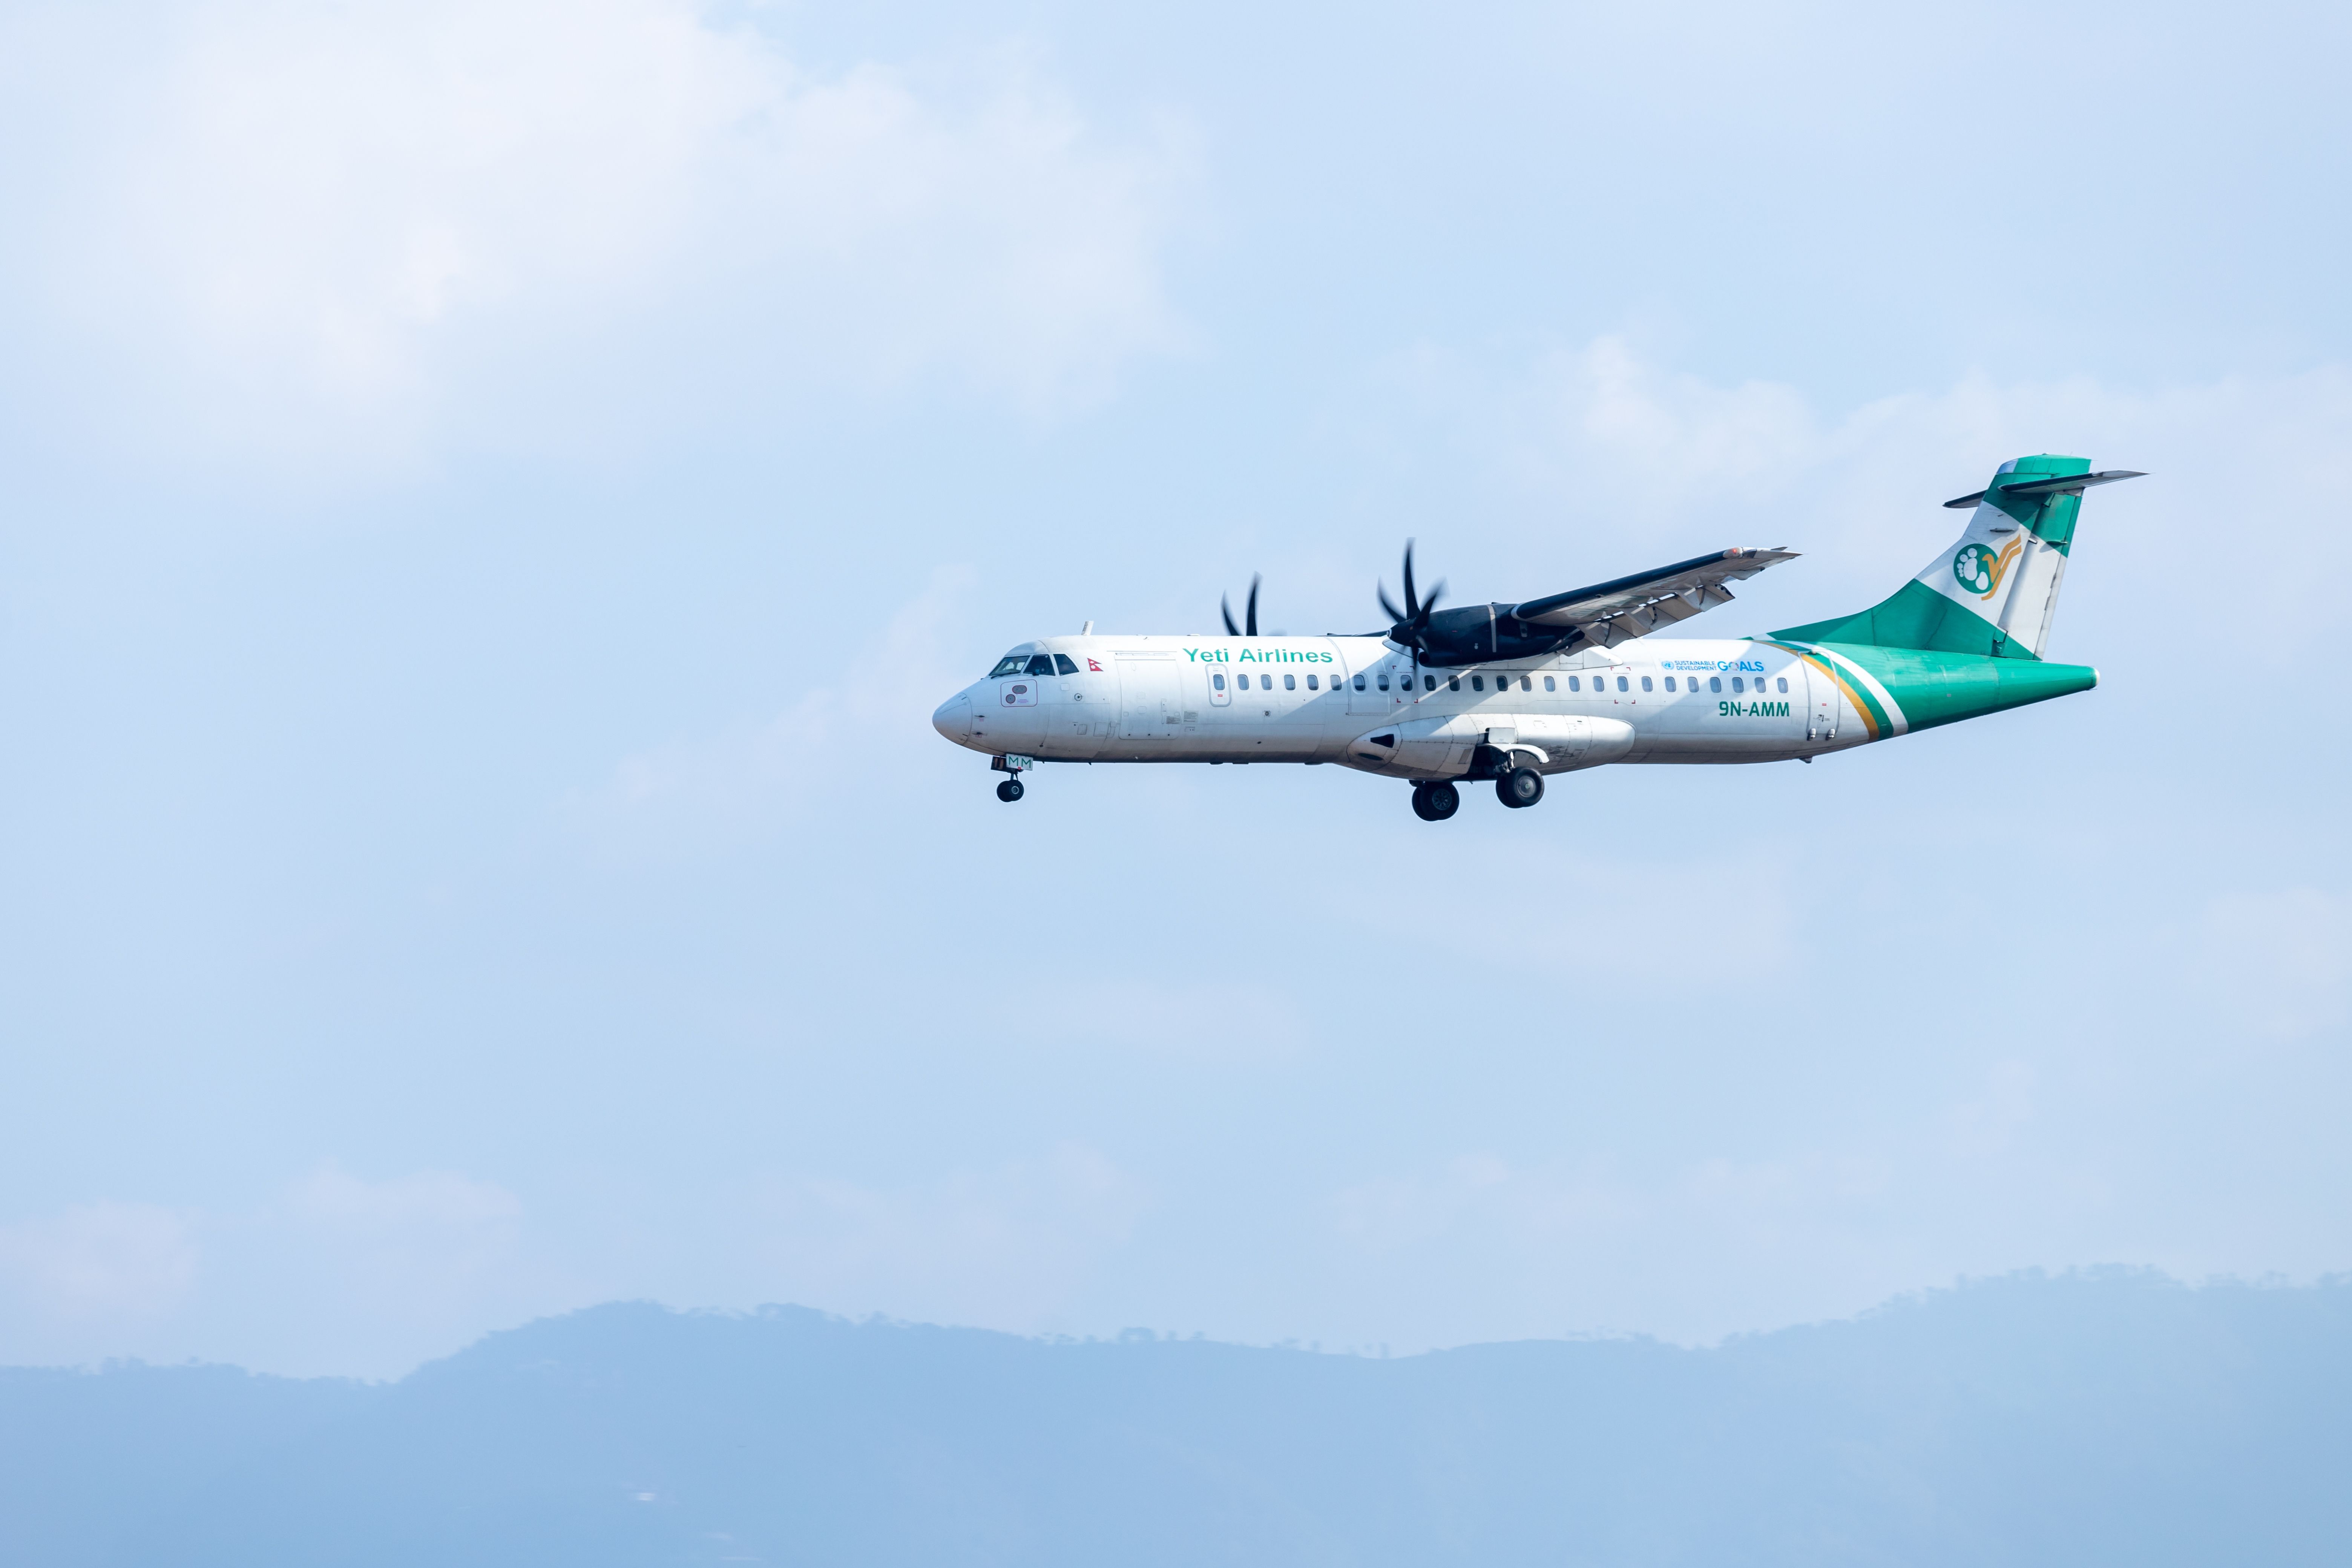 Yeti Airlines ATR 72-500 landing at Kathmandu International Airport KTM